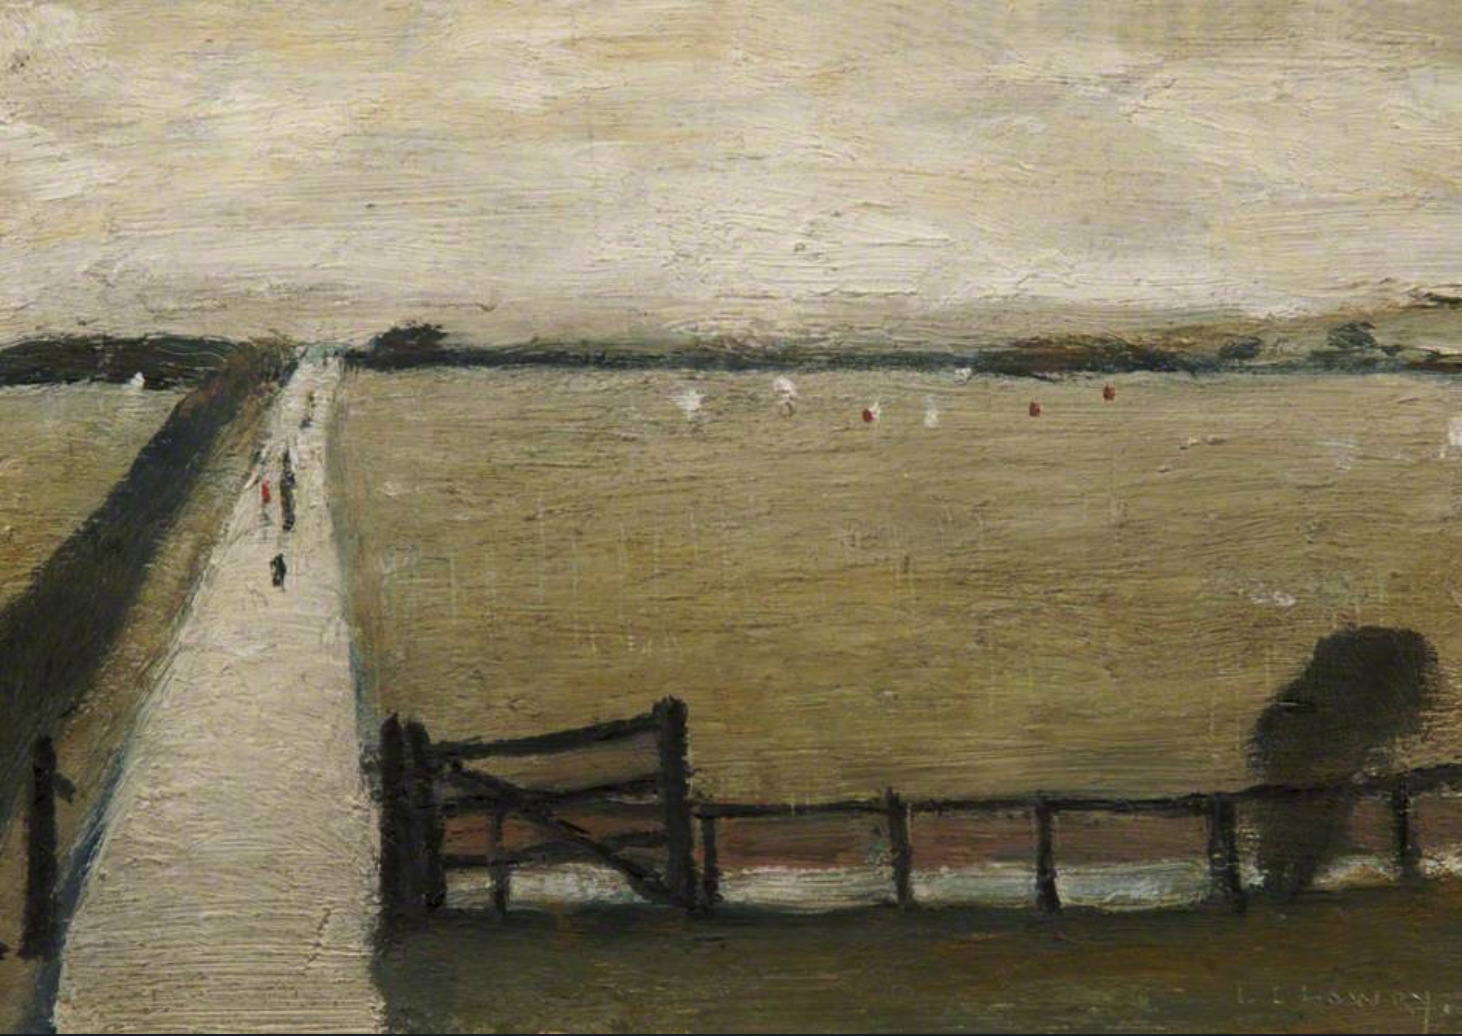 Swinton Mos (1922) by Laurence Stephen Lowry (1887 - 1976), English artist.